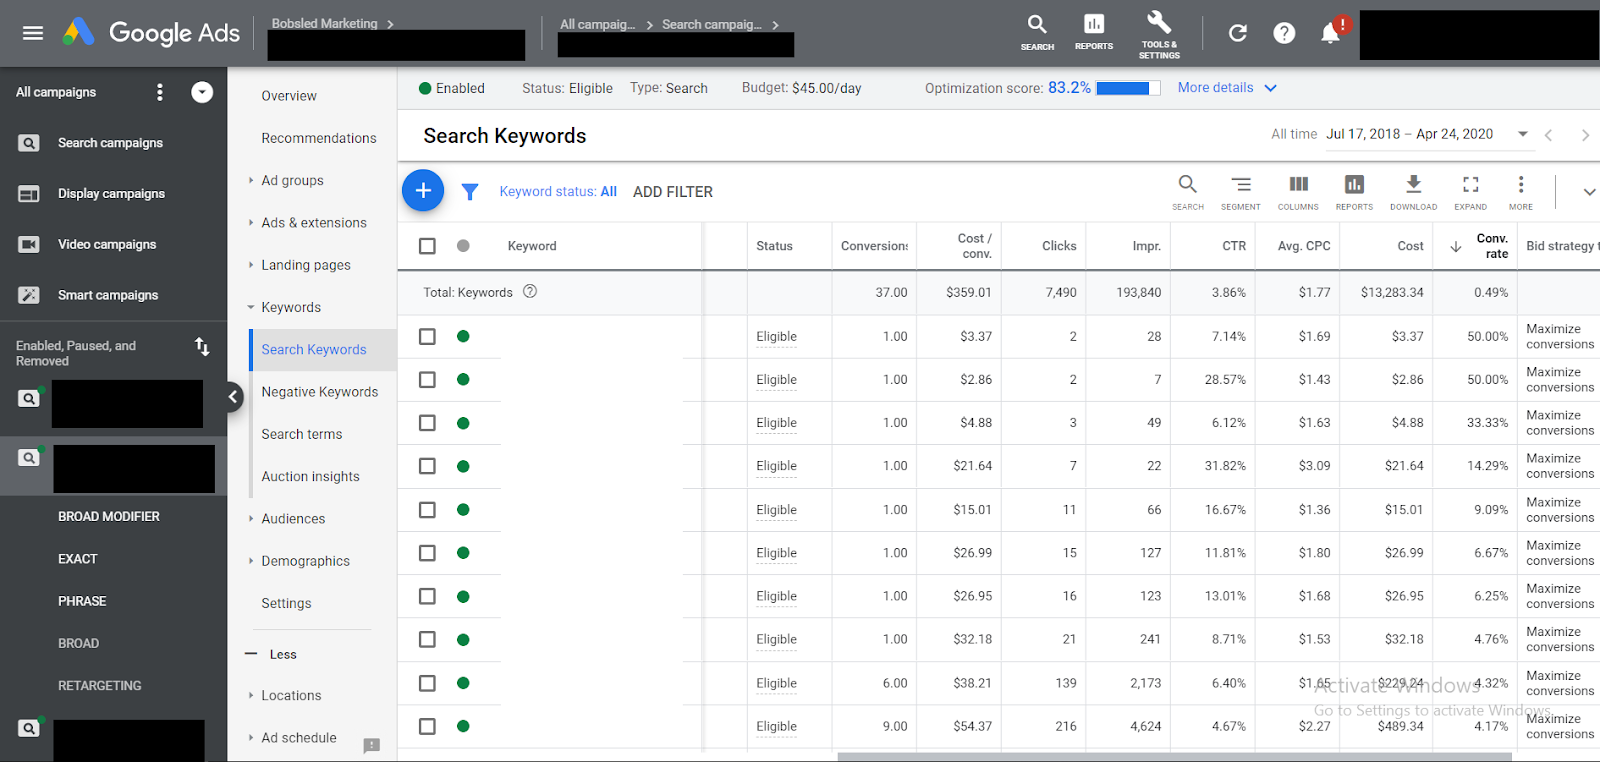 Keyword performance data in the Google Ads dashboard.